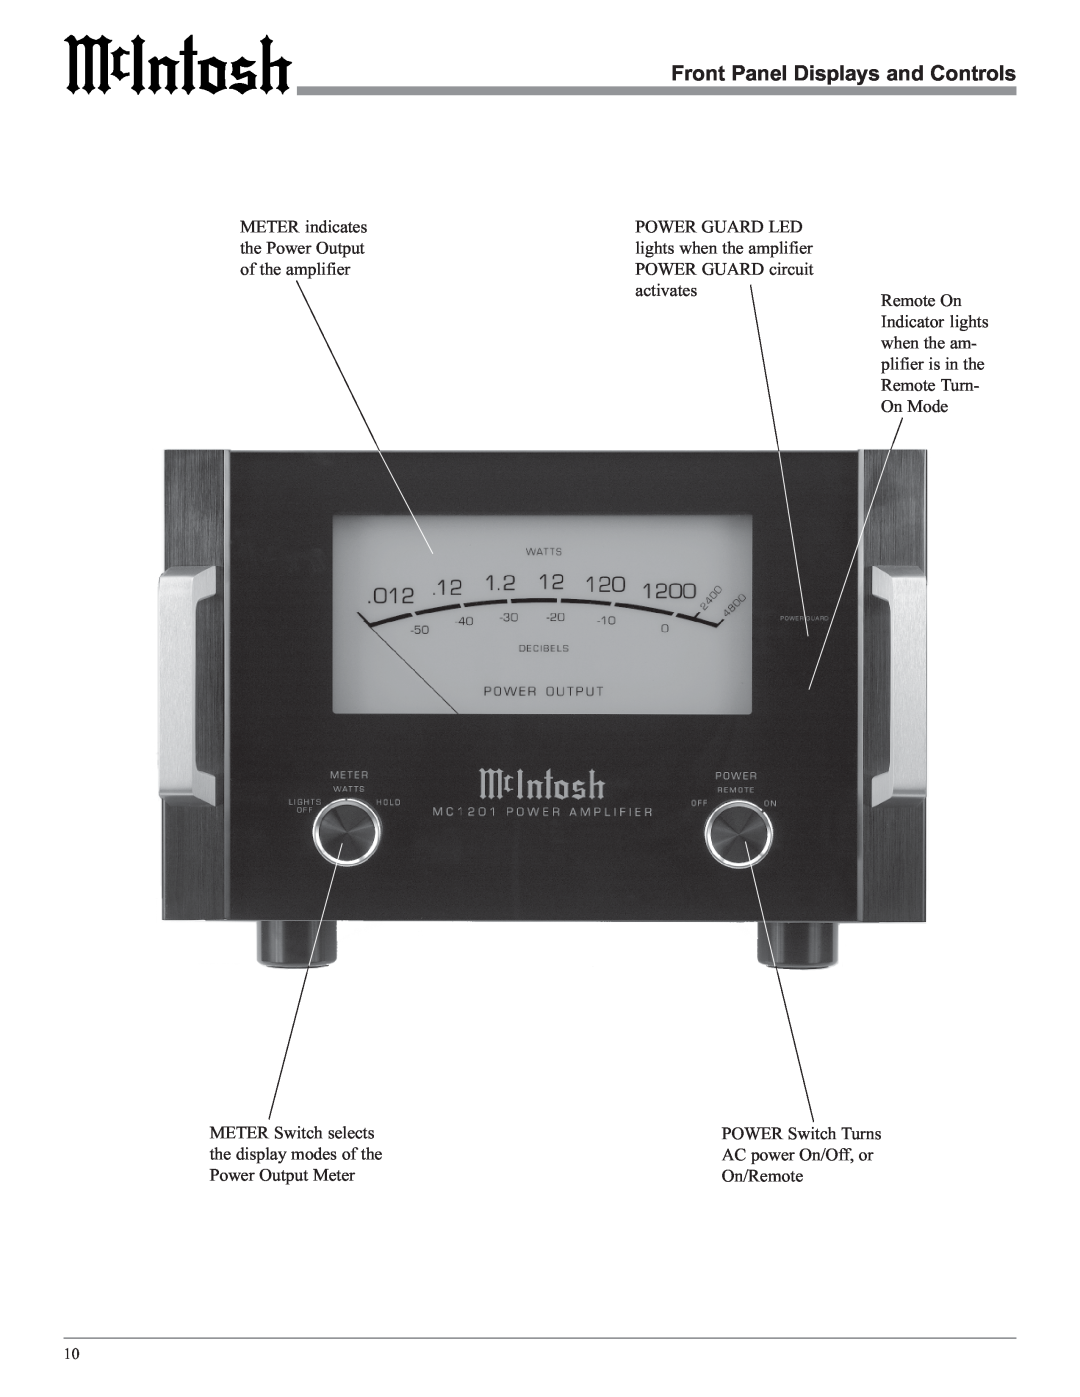 McIntosh MC1201 manual Front Panel Displays and Controls 